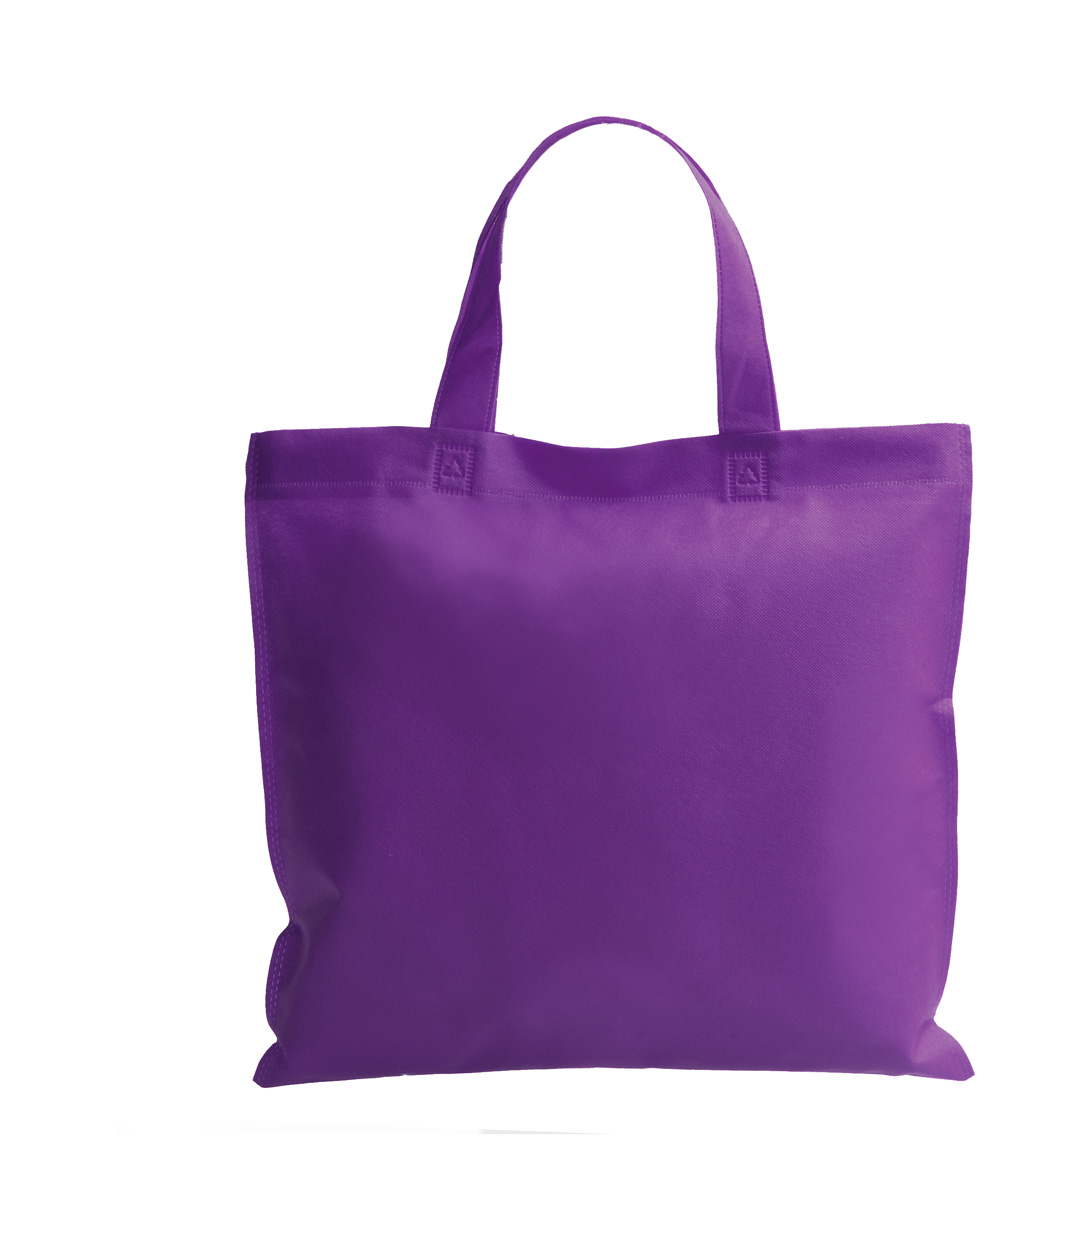 Nox bag - violet